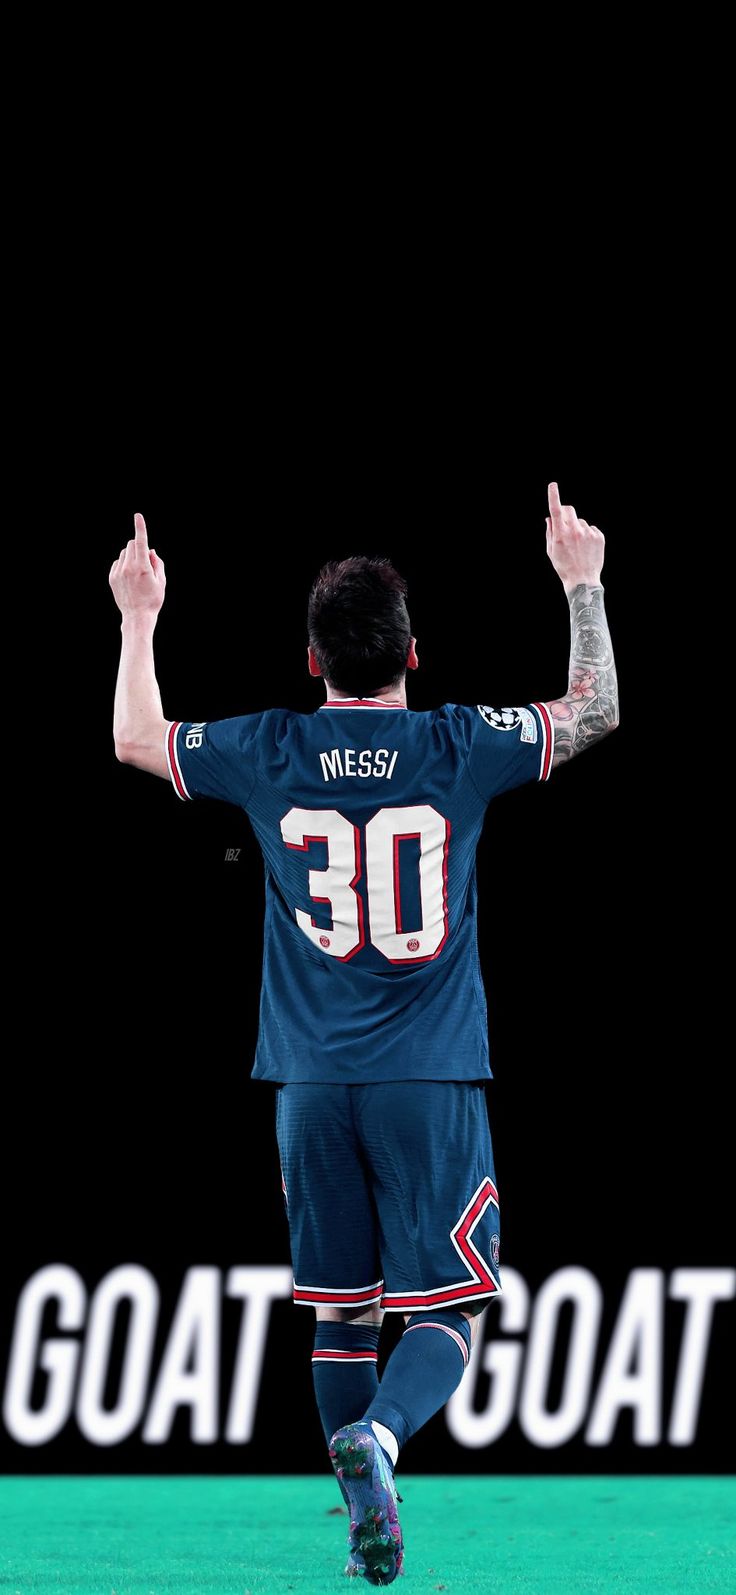 Lionel Messi Footballer Fifa 16 Ea Sports Video Game wallpaper  Lionel  messi Messi Fifa 16